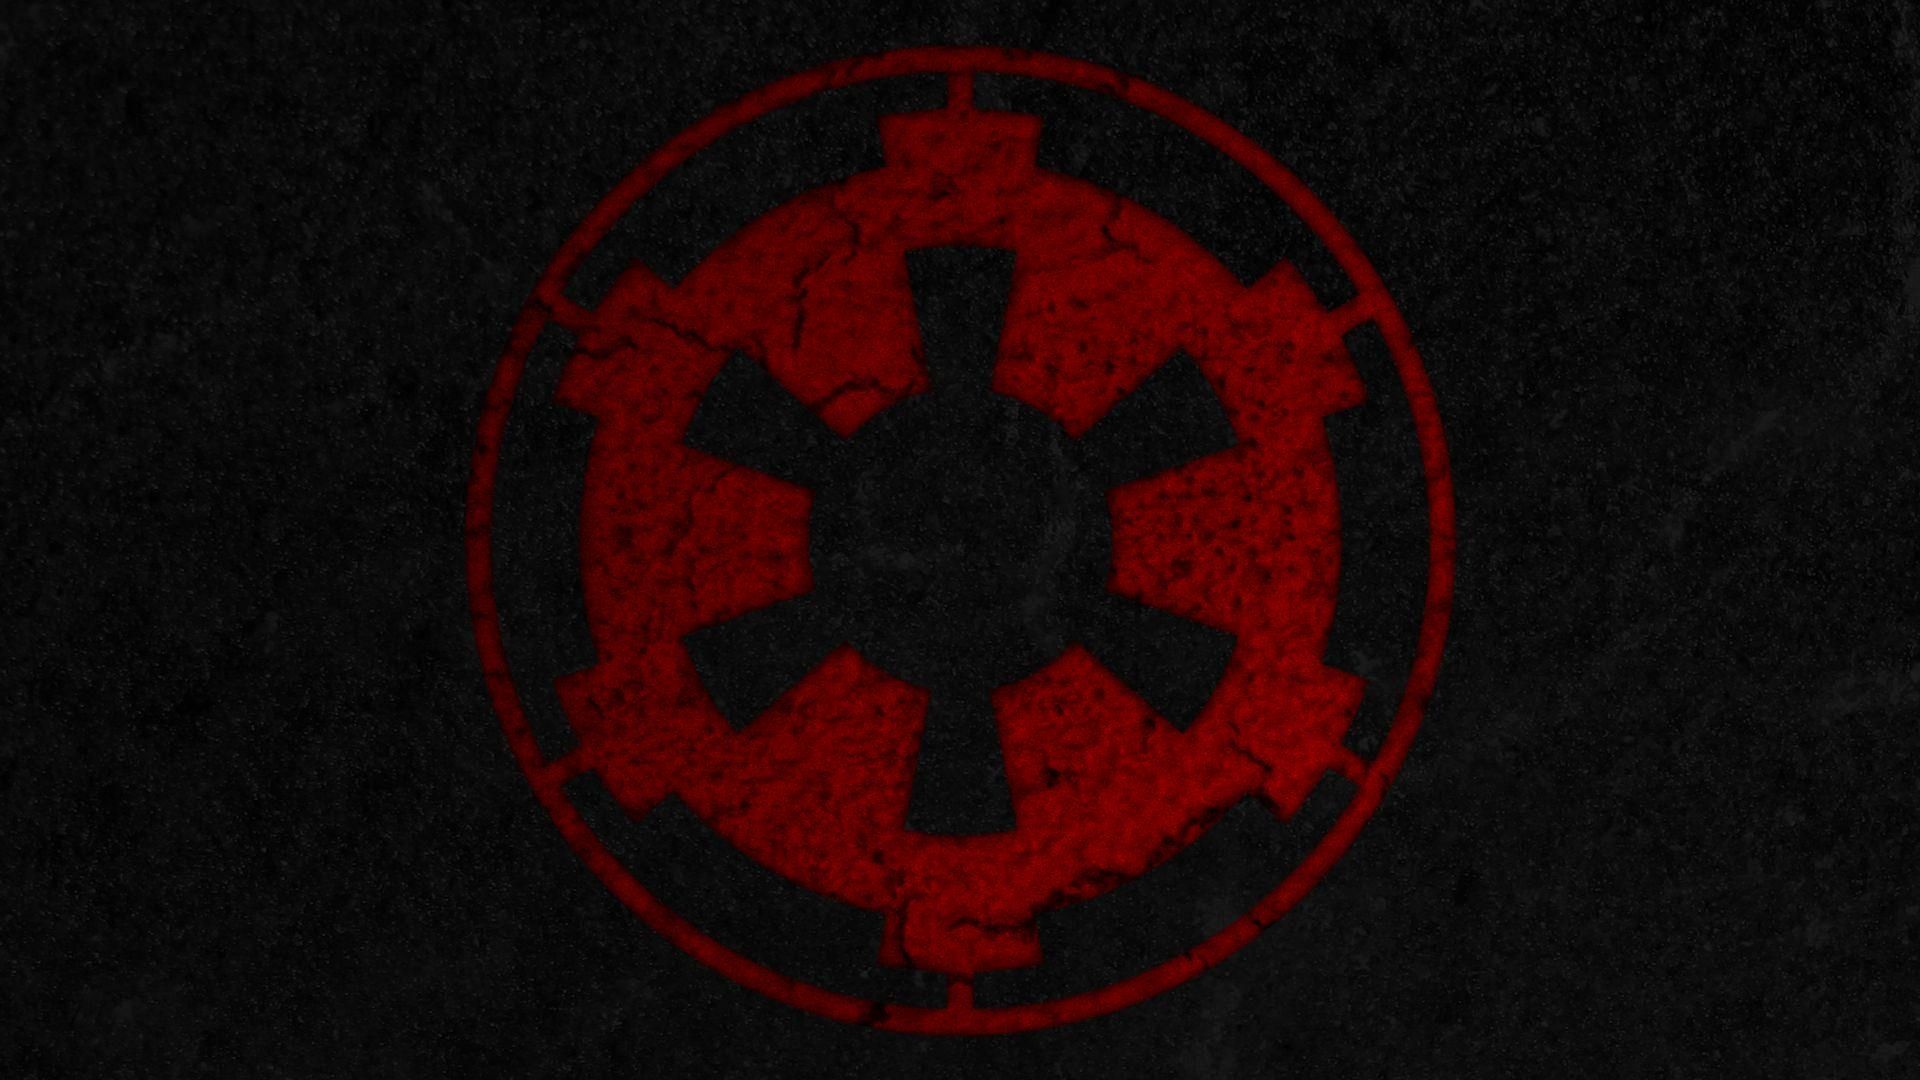 Sith Empire Logo Wallpapers